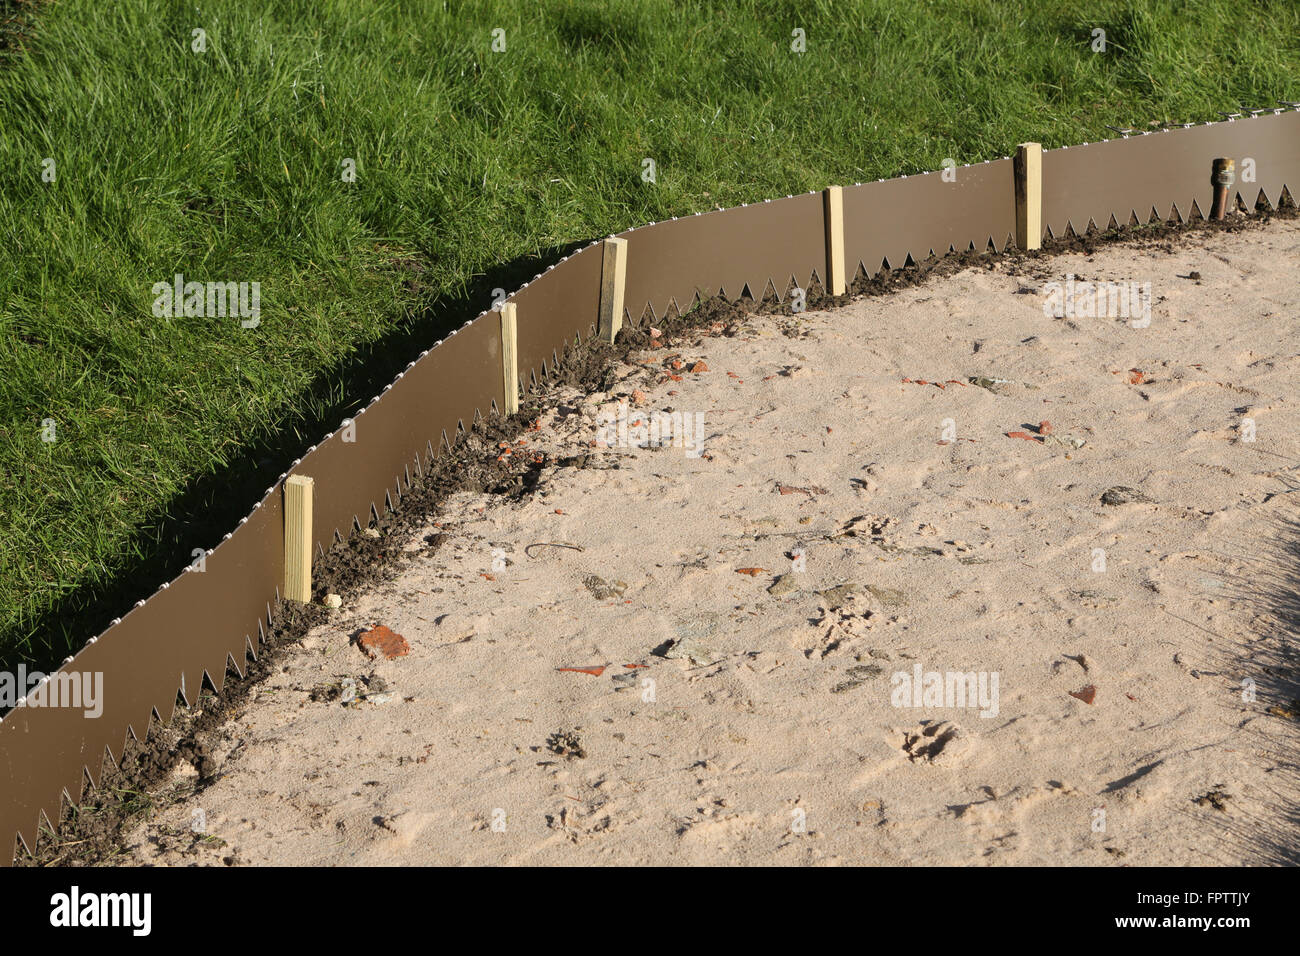 Verlegung neuer Gartenweg - Rasen Kanten Streifen Surrey England Stockfoto